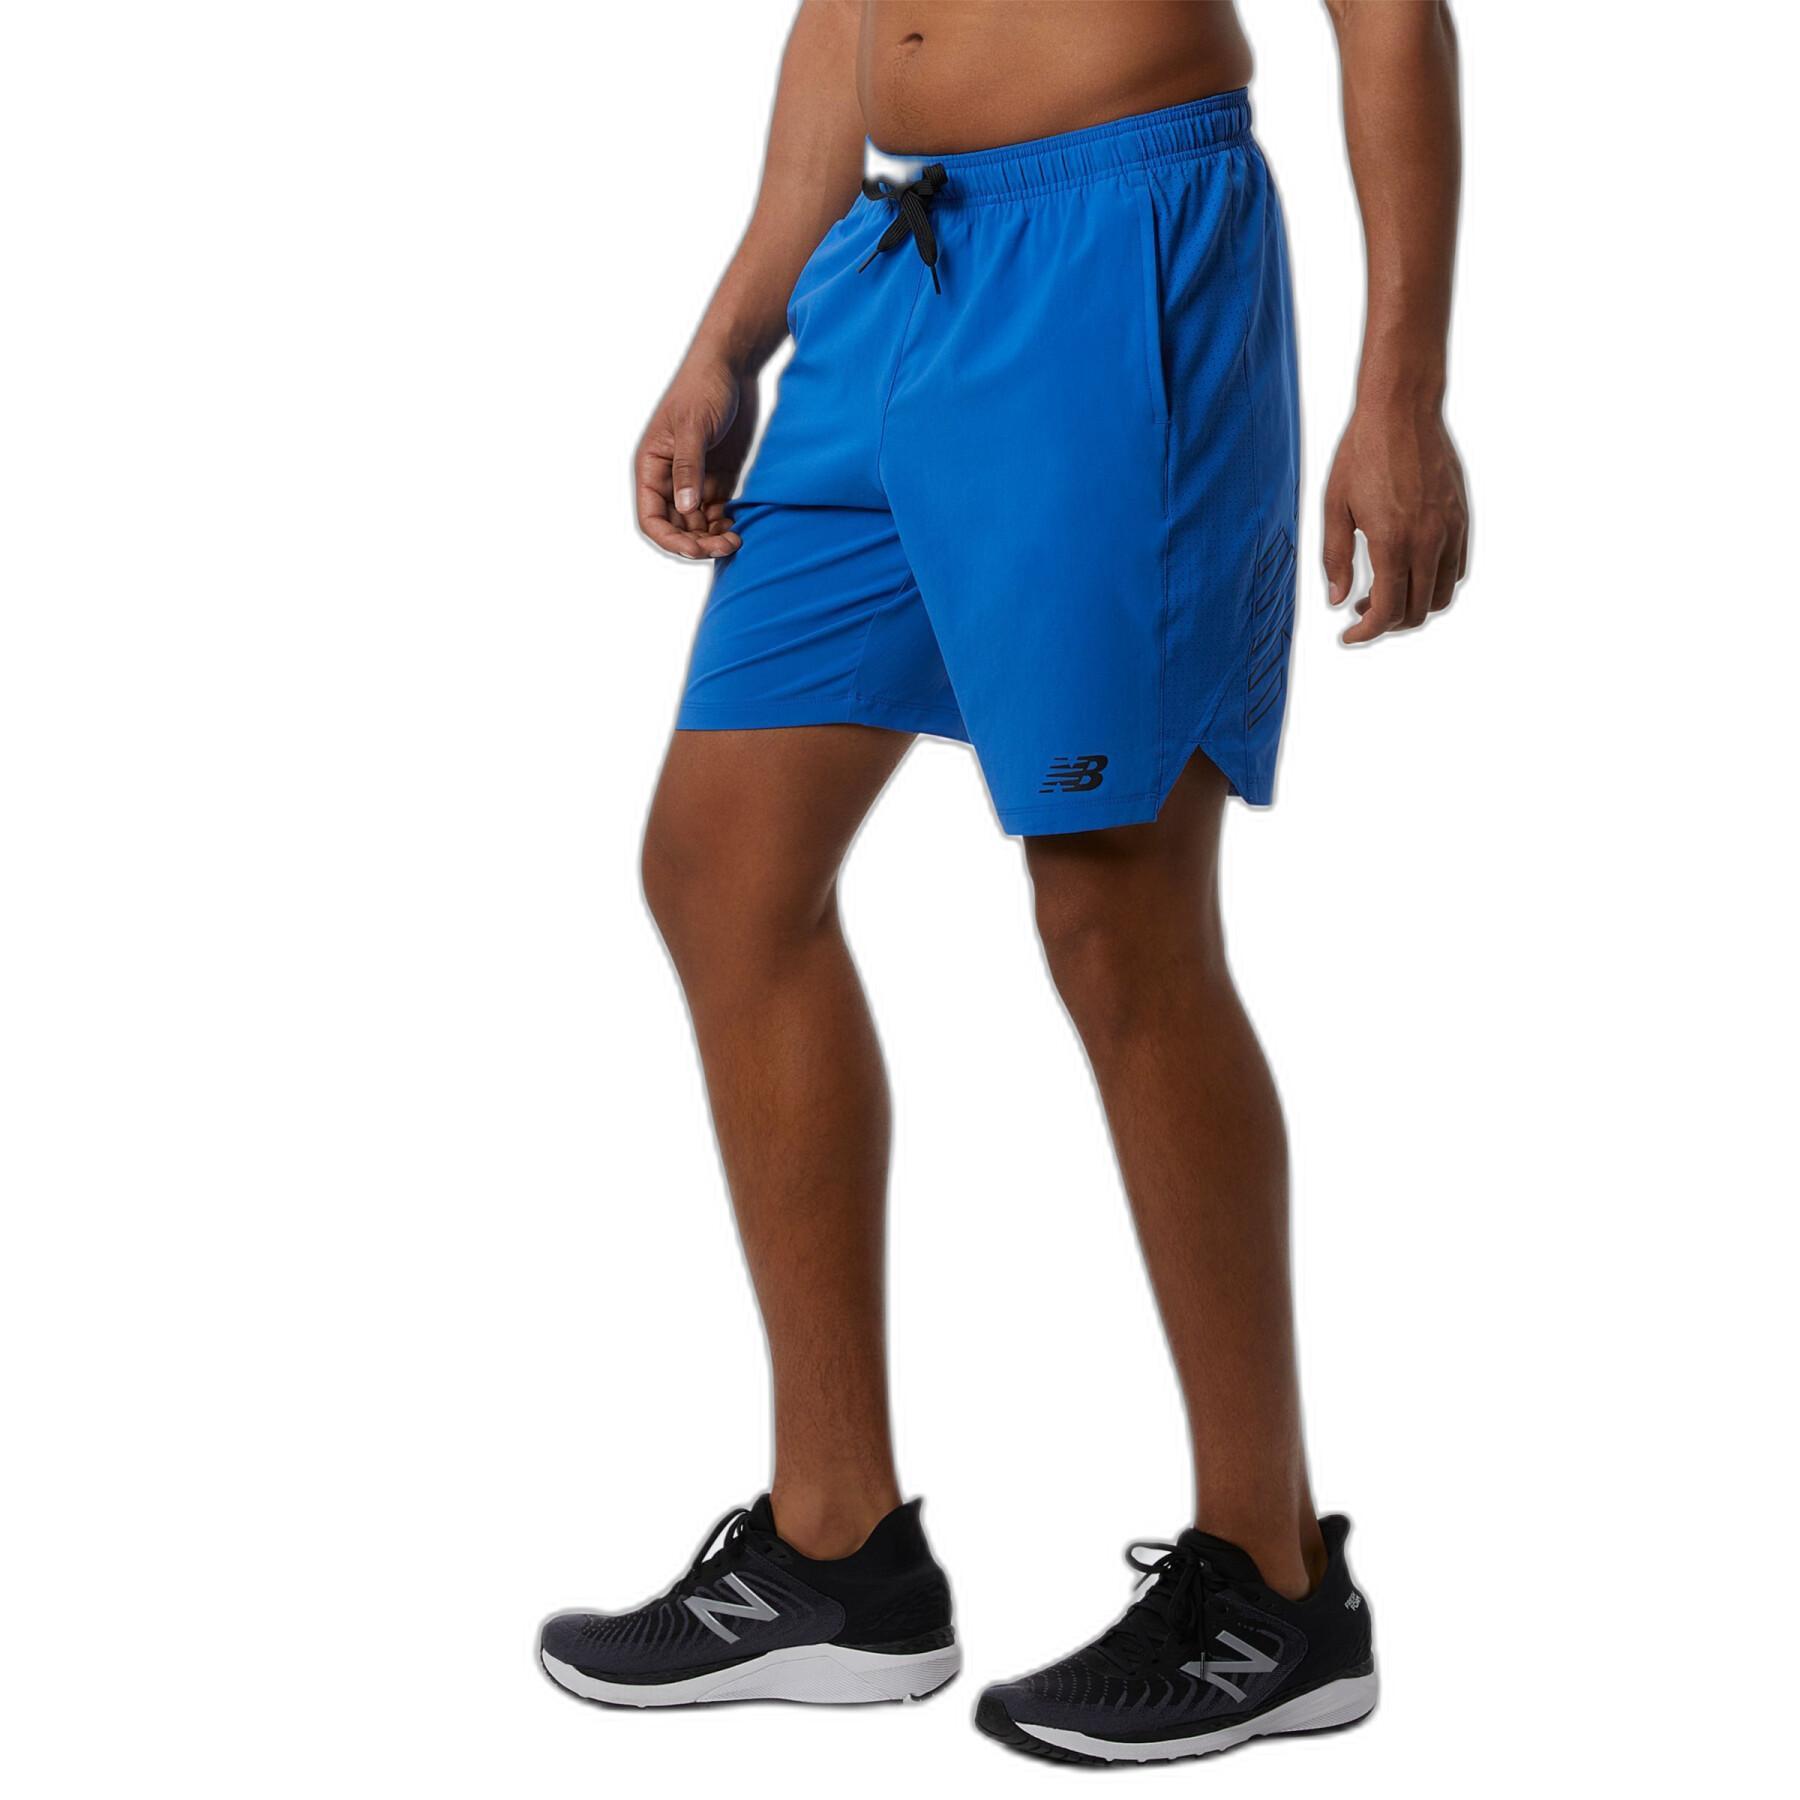 Gewebte Shorts mit Logo New Balance Tenacity 9 "